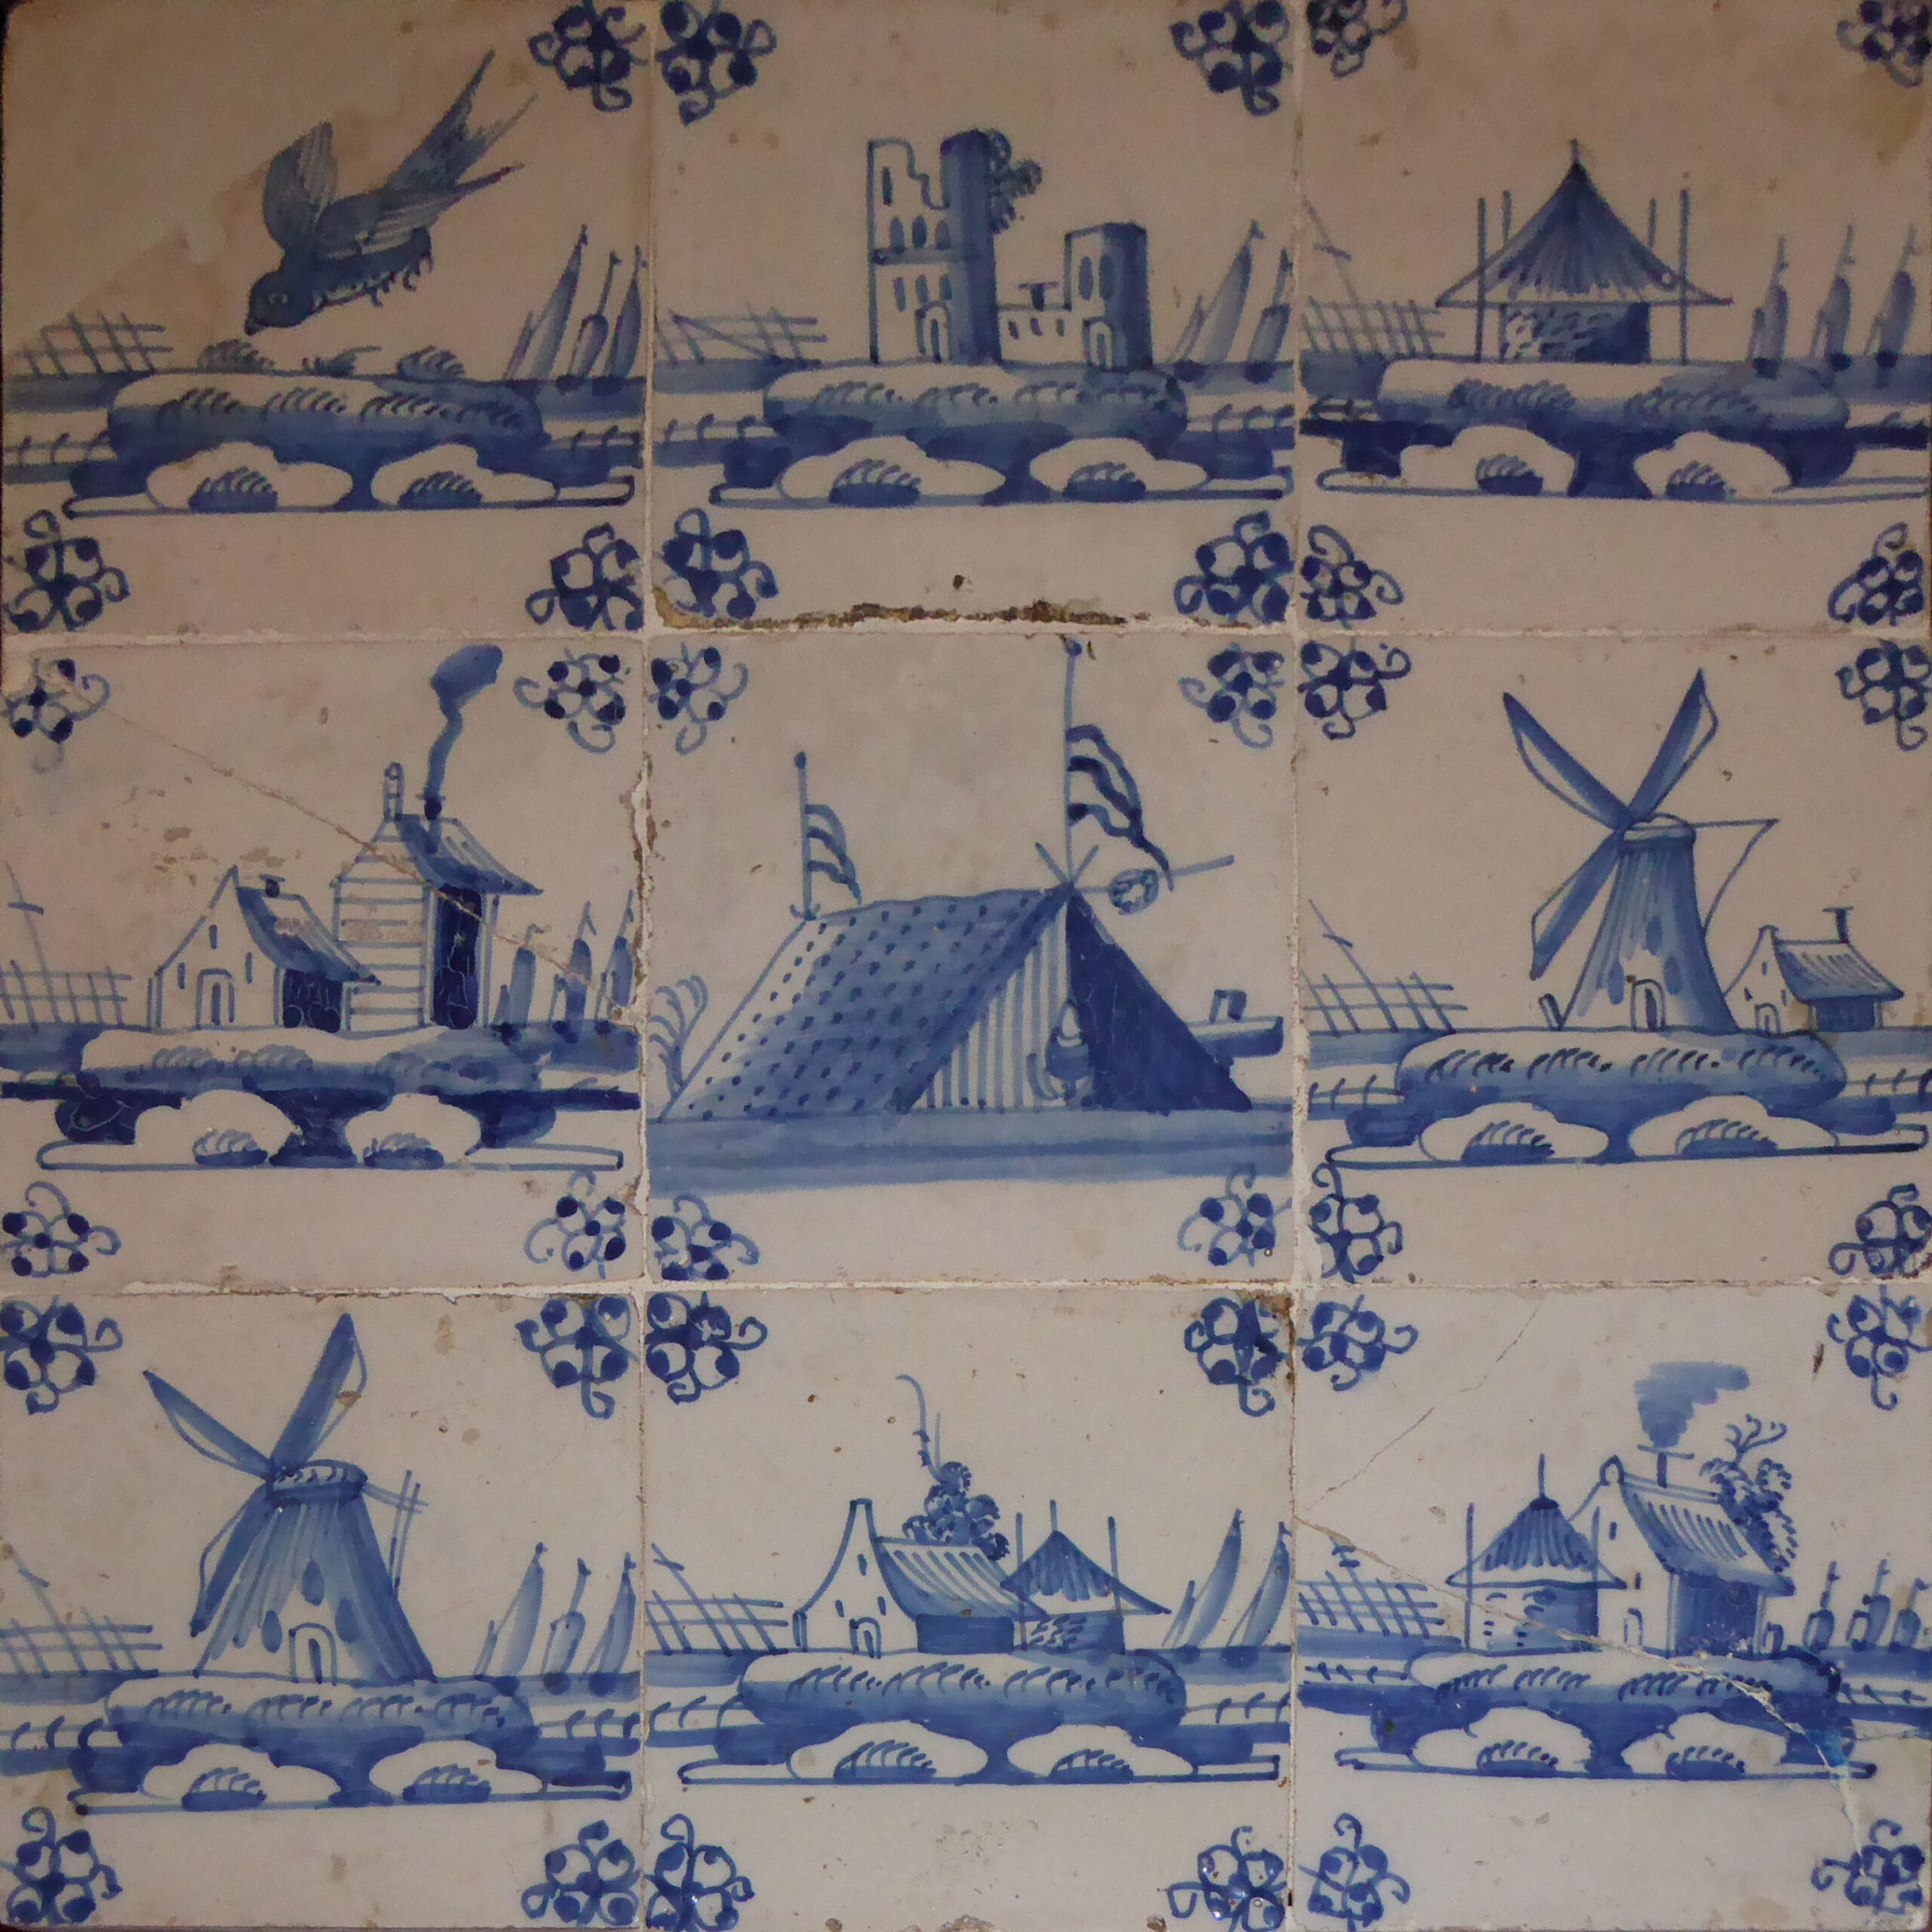 00771. Panel de 9 azulejos de tema único con motivos varios. Colección privada. Cádiz